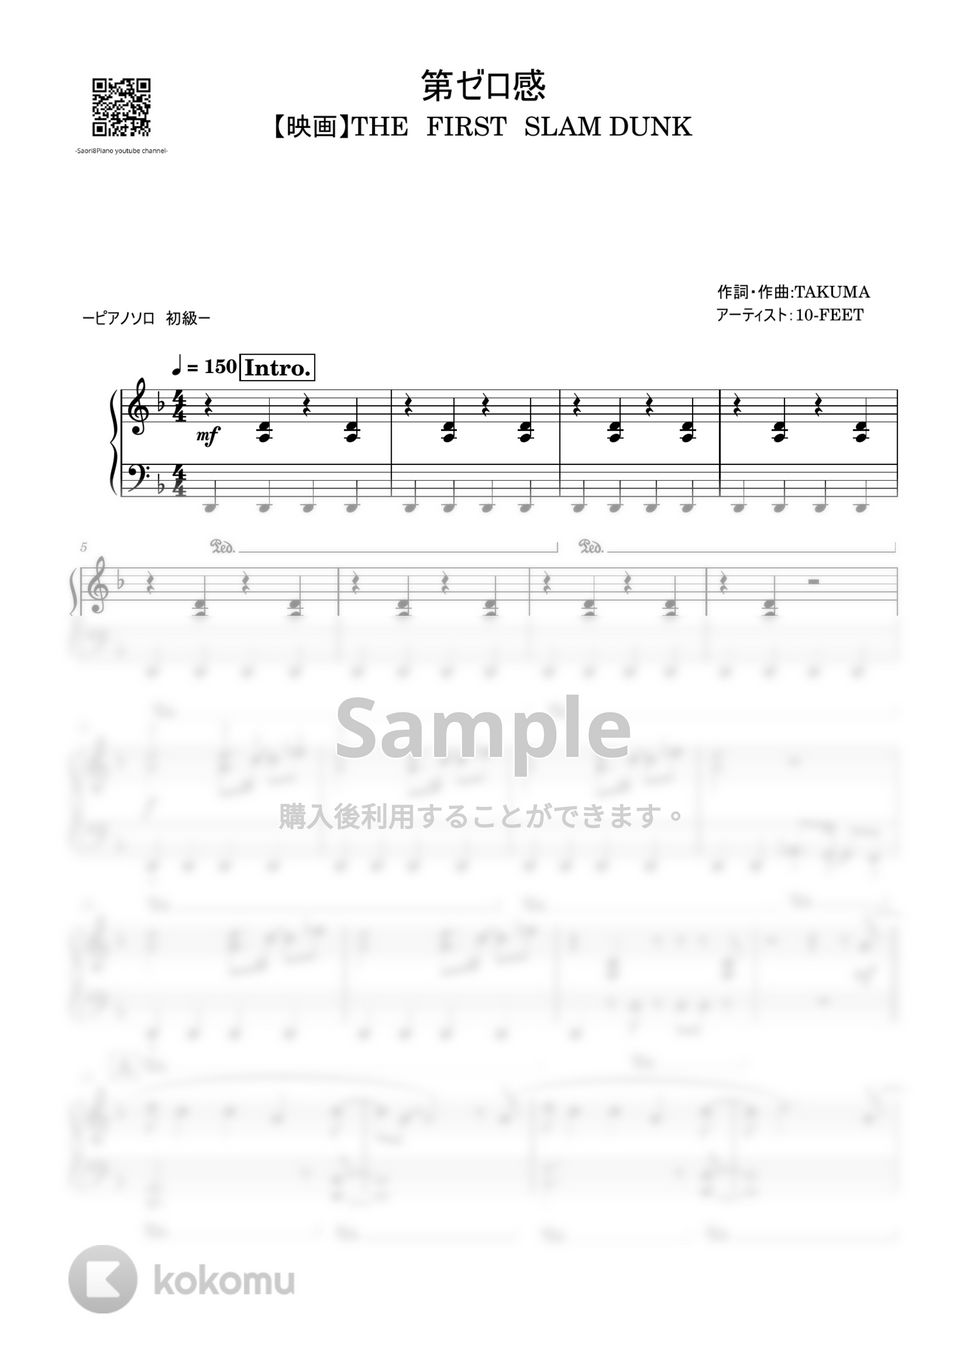 10-FEET - 第ゼロ感 (THE FIRST SLAM DUNK/初級レベル) by Saori8Piano